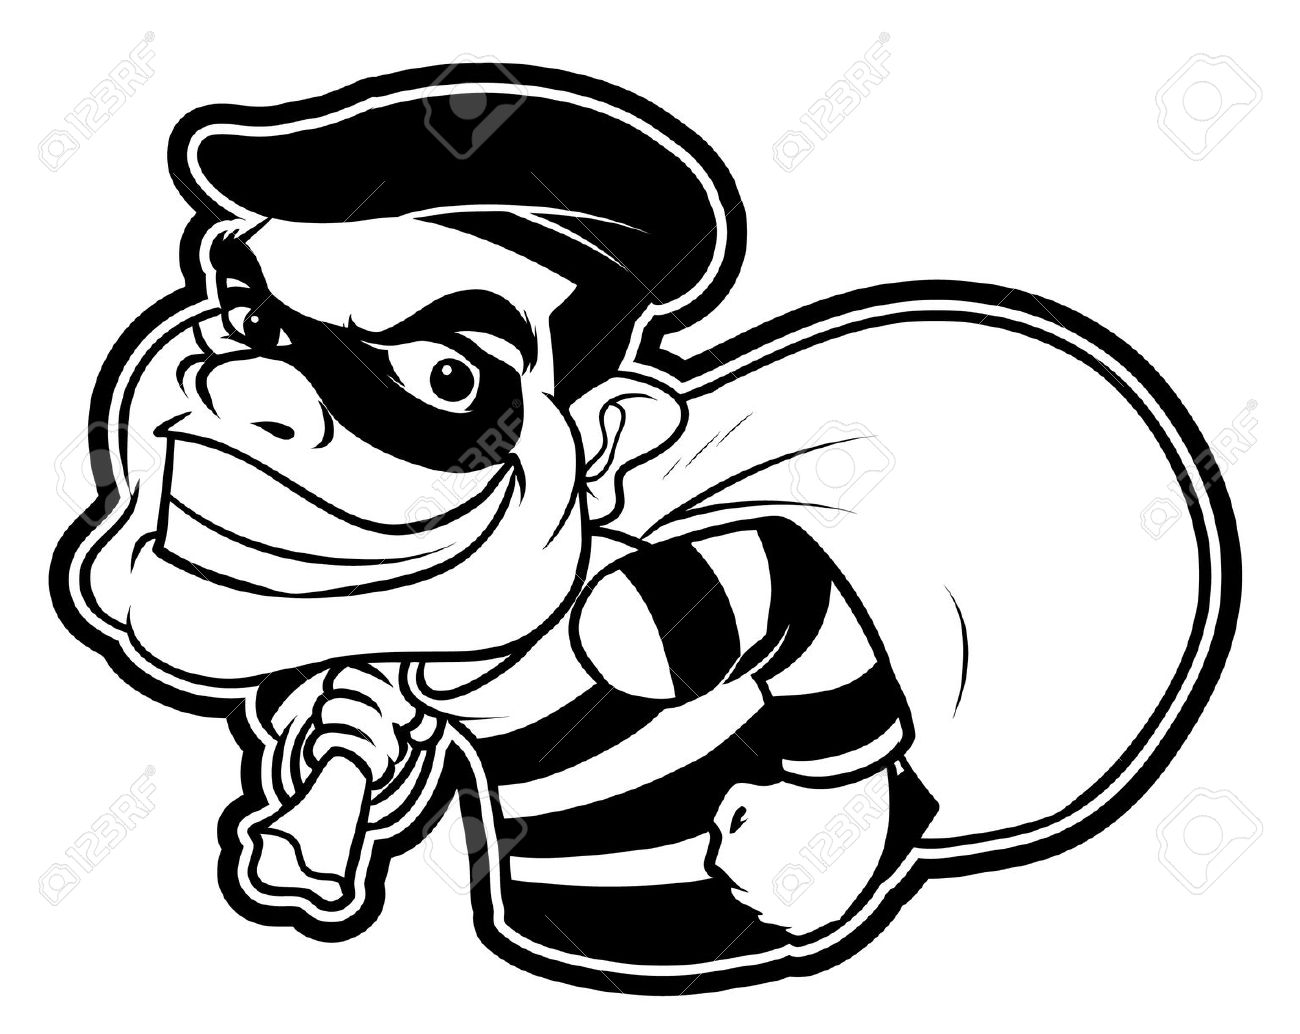 Robber thief clip art free cl - Robber Clip Art